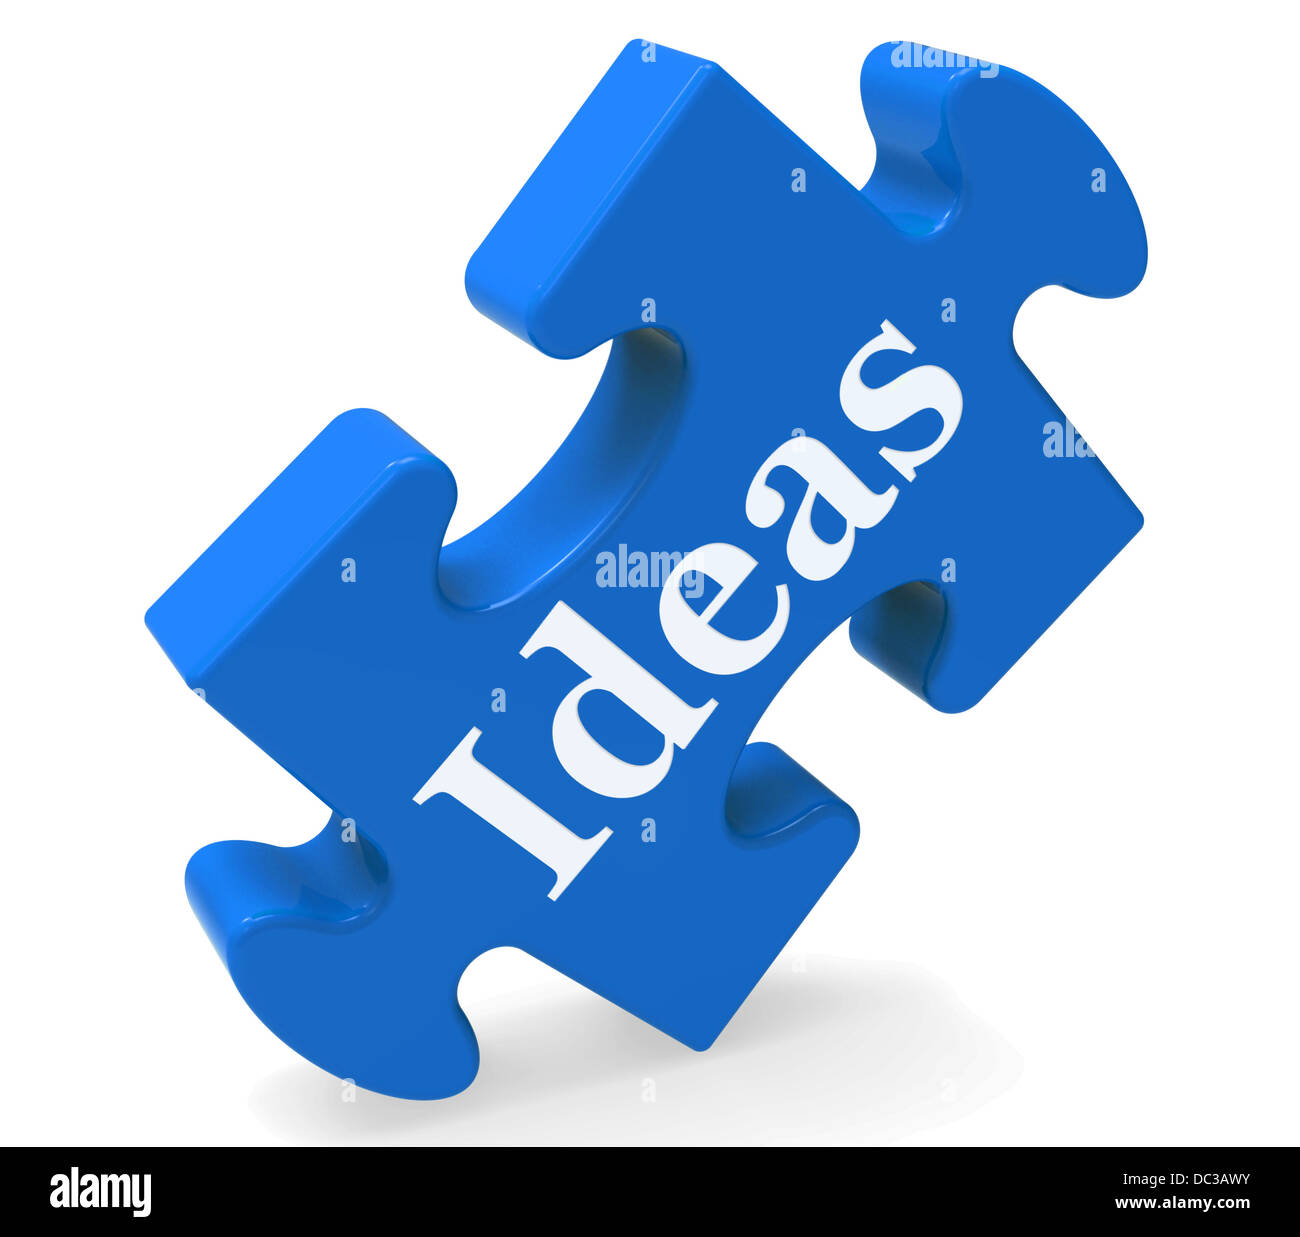 Ideas Means Improvement Concept Or Creativity Stock Photo